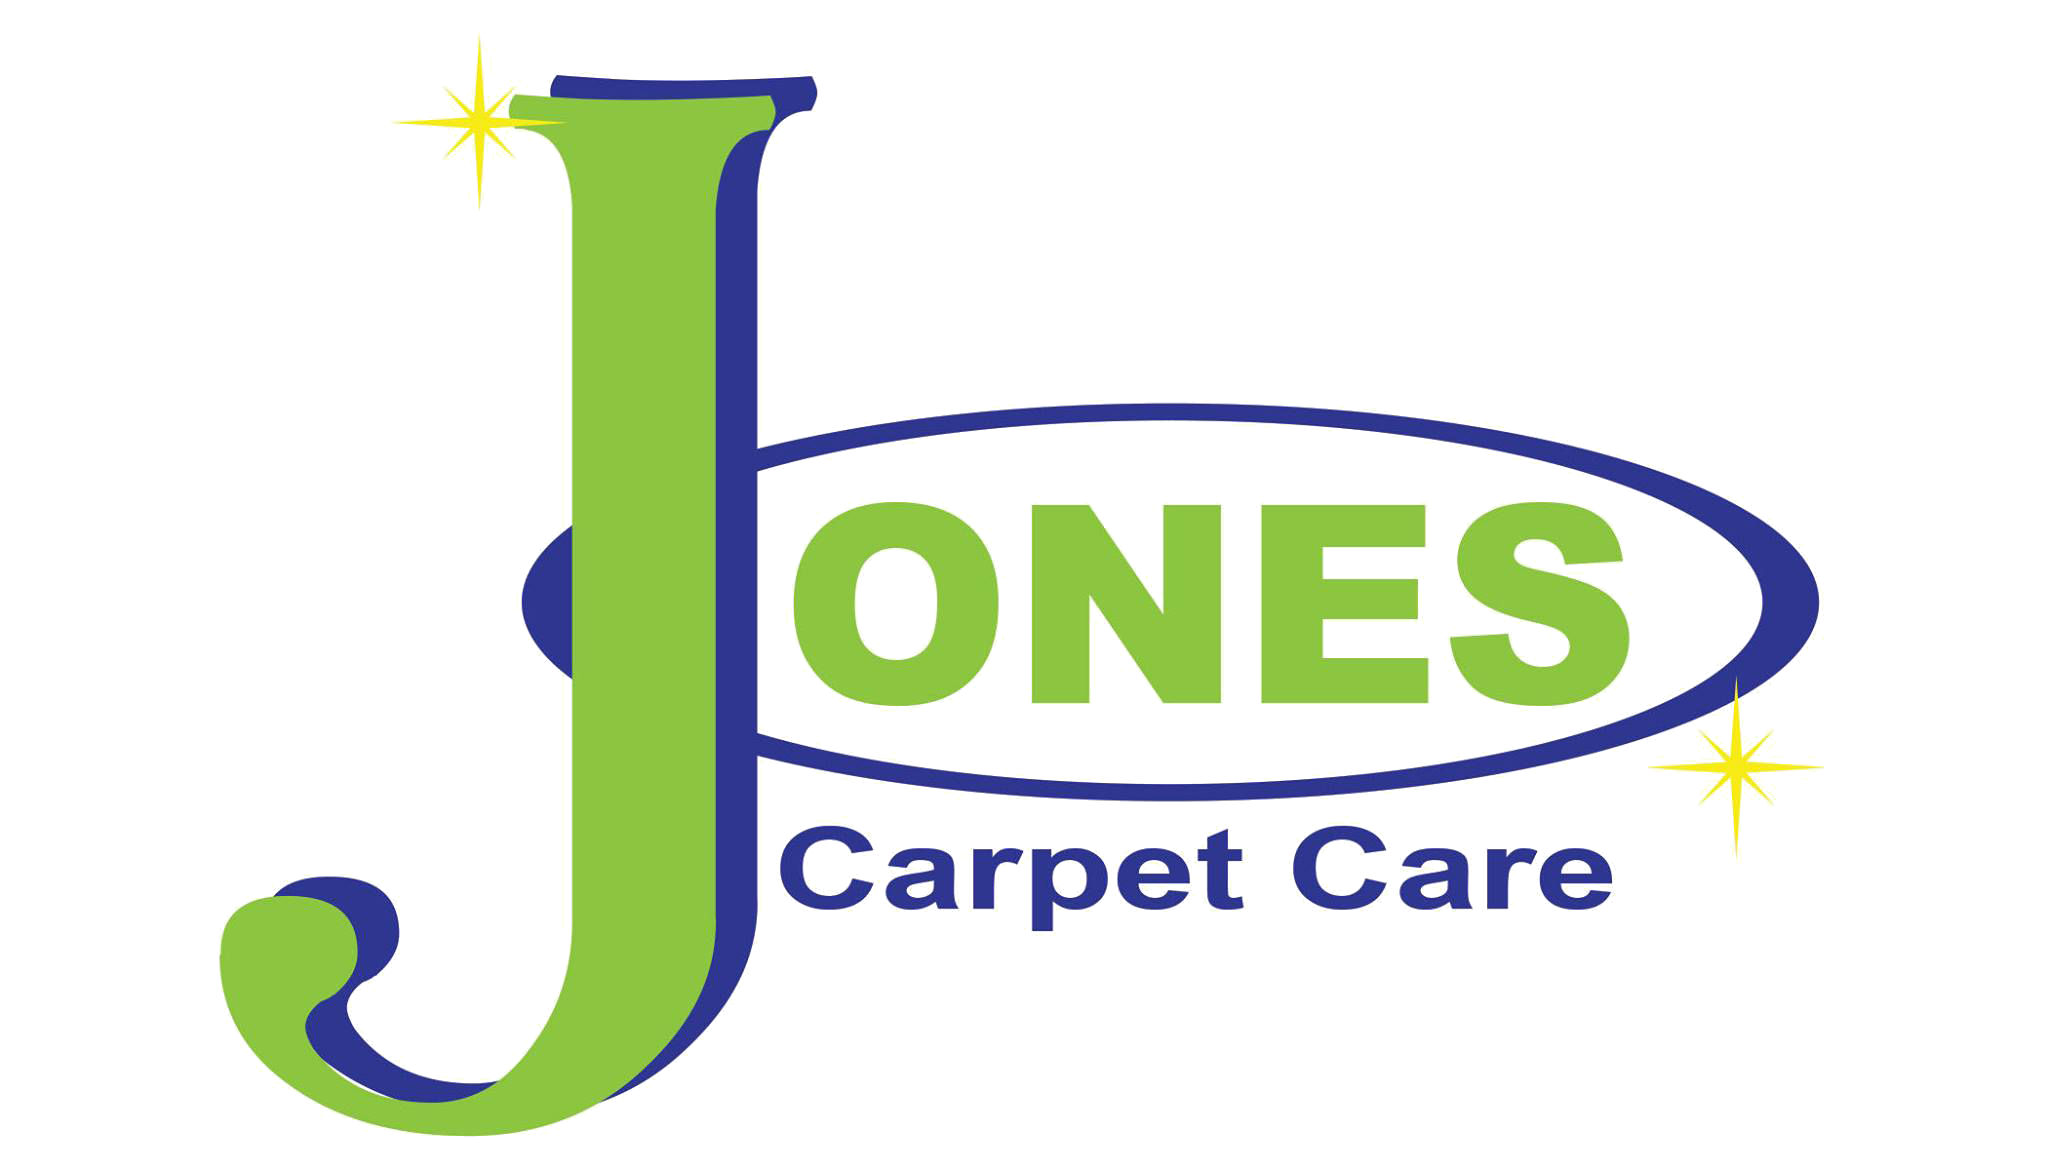 Jones Carpet Care